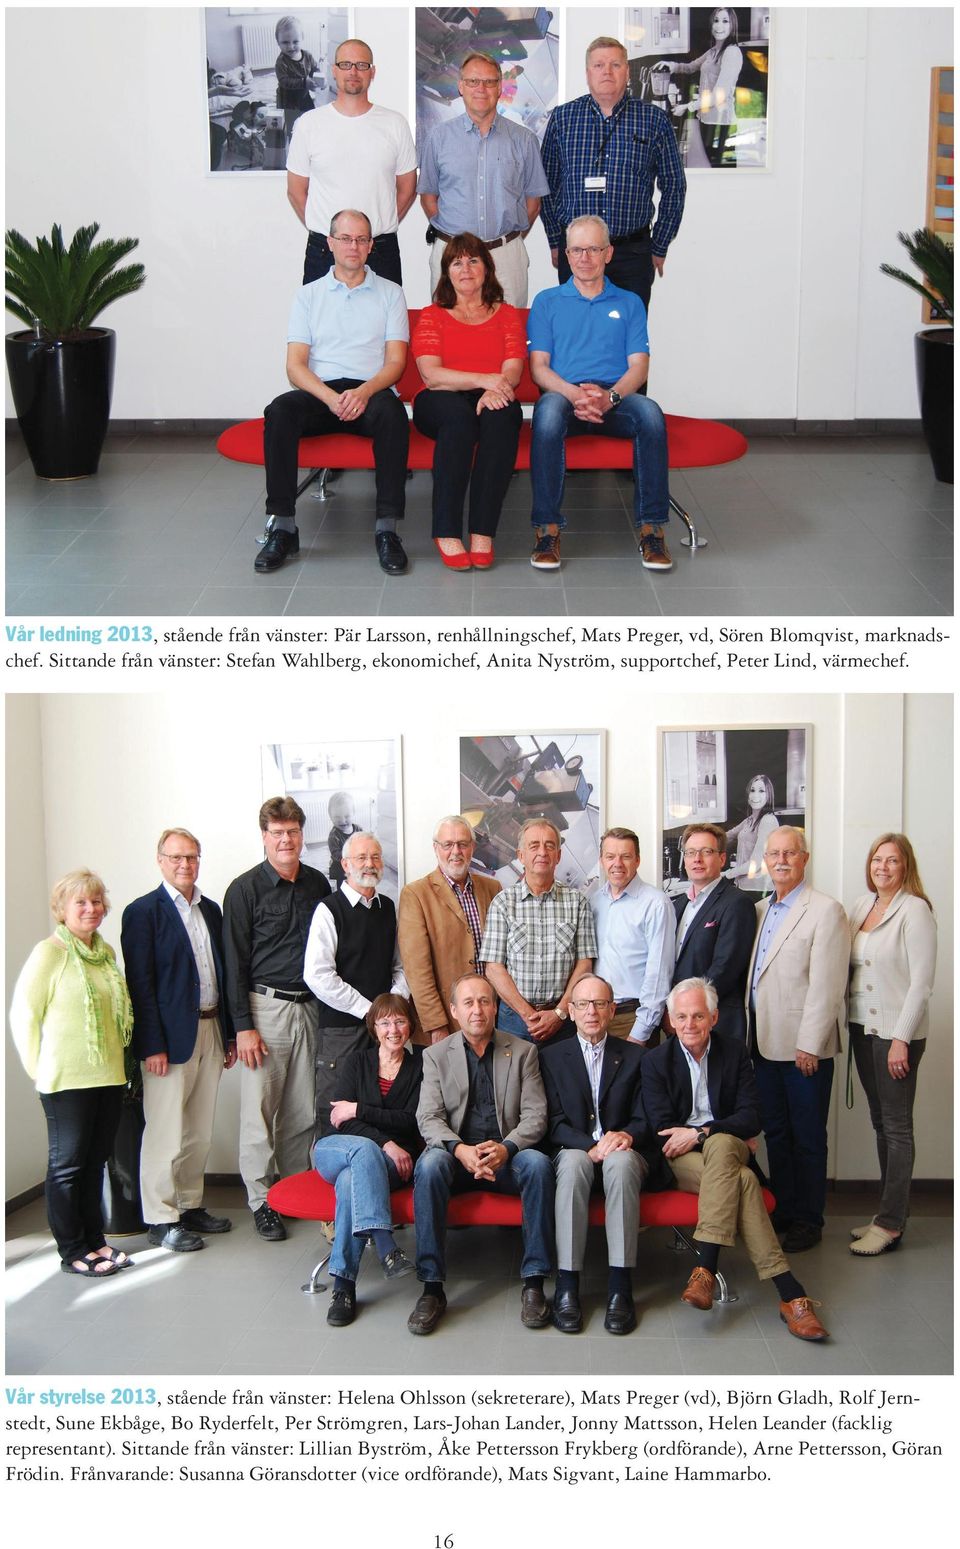 Vår styrelse 2013, stående från vänster: Helena Ohlsson (sekreterare), Mats Preger (vd), Björn Gladh, Rolf Jernstedt, Sune Ekbåge, Bo Ryderfelt, Per Strömgren,